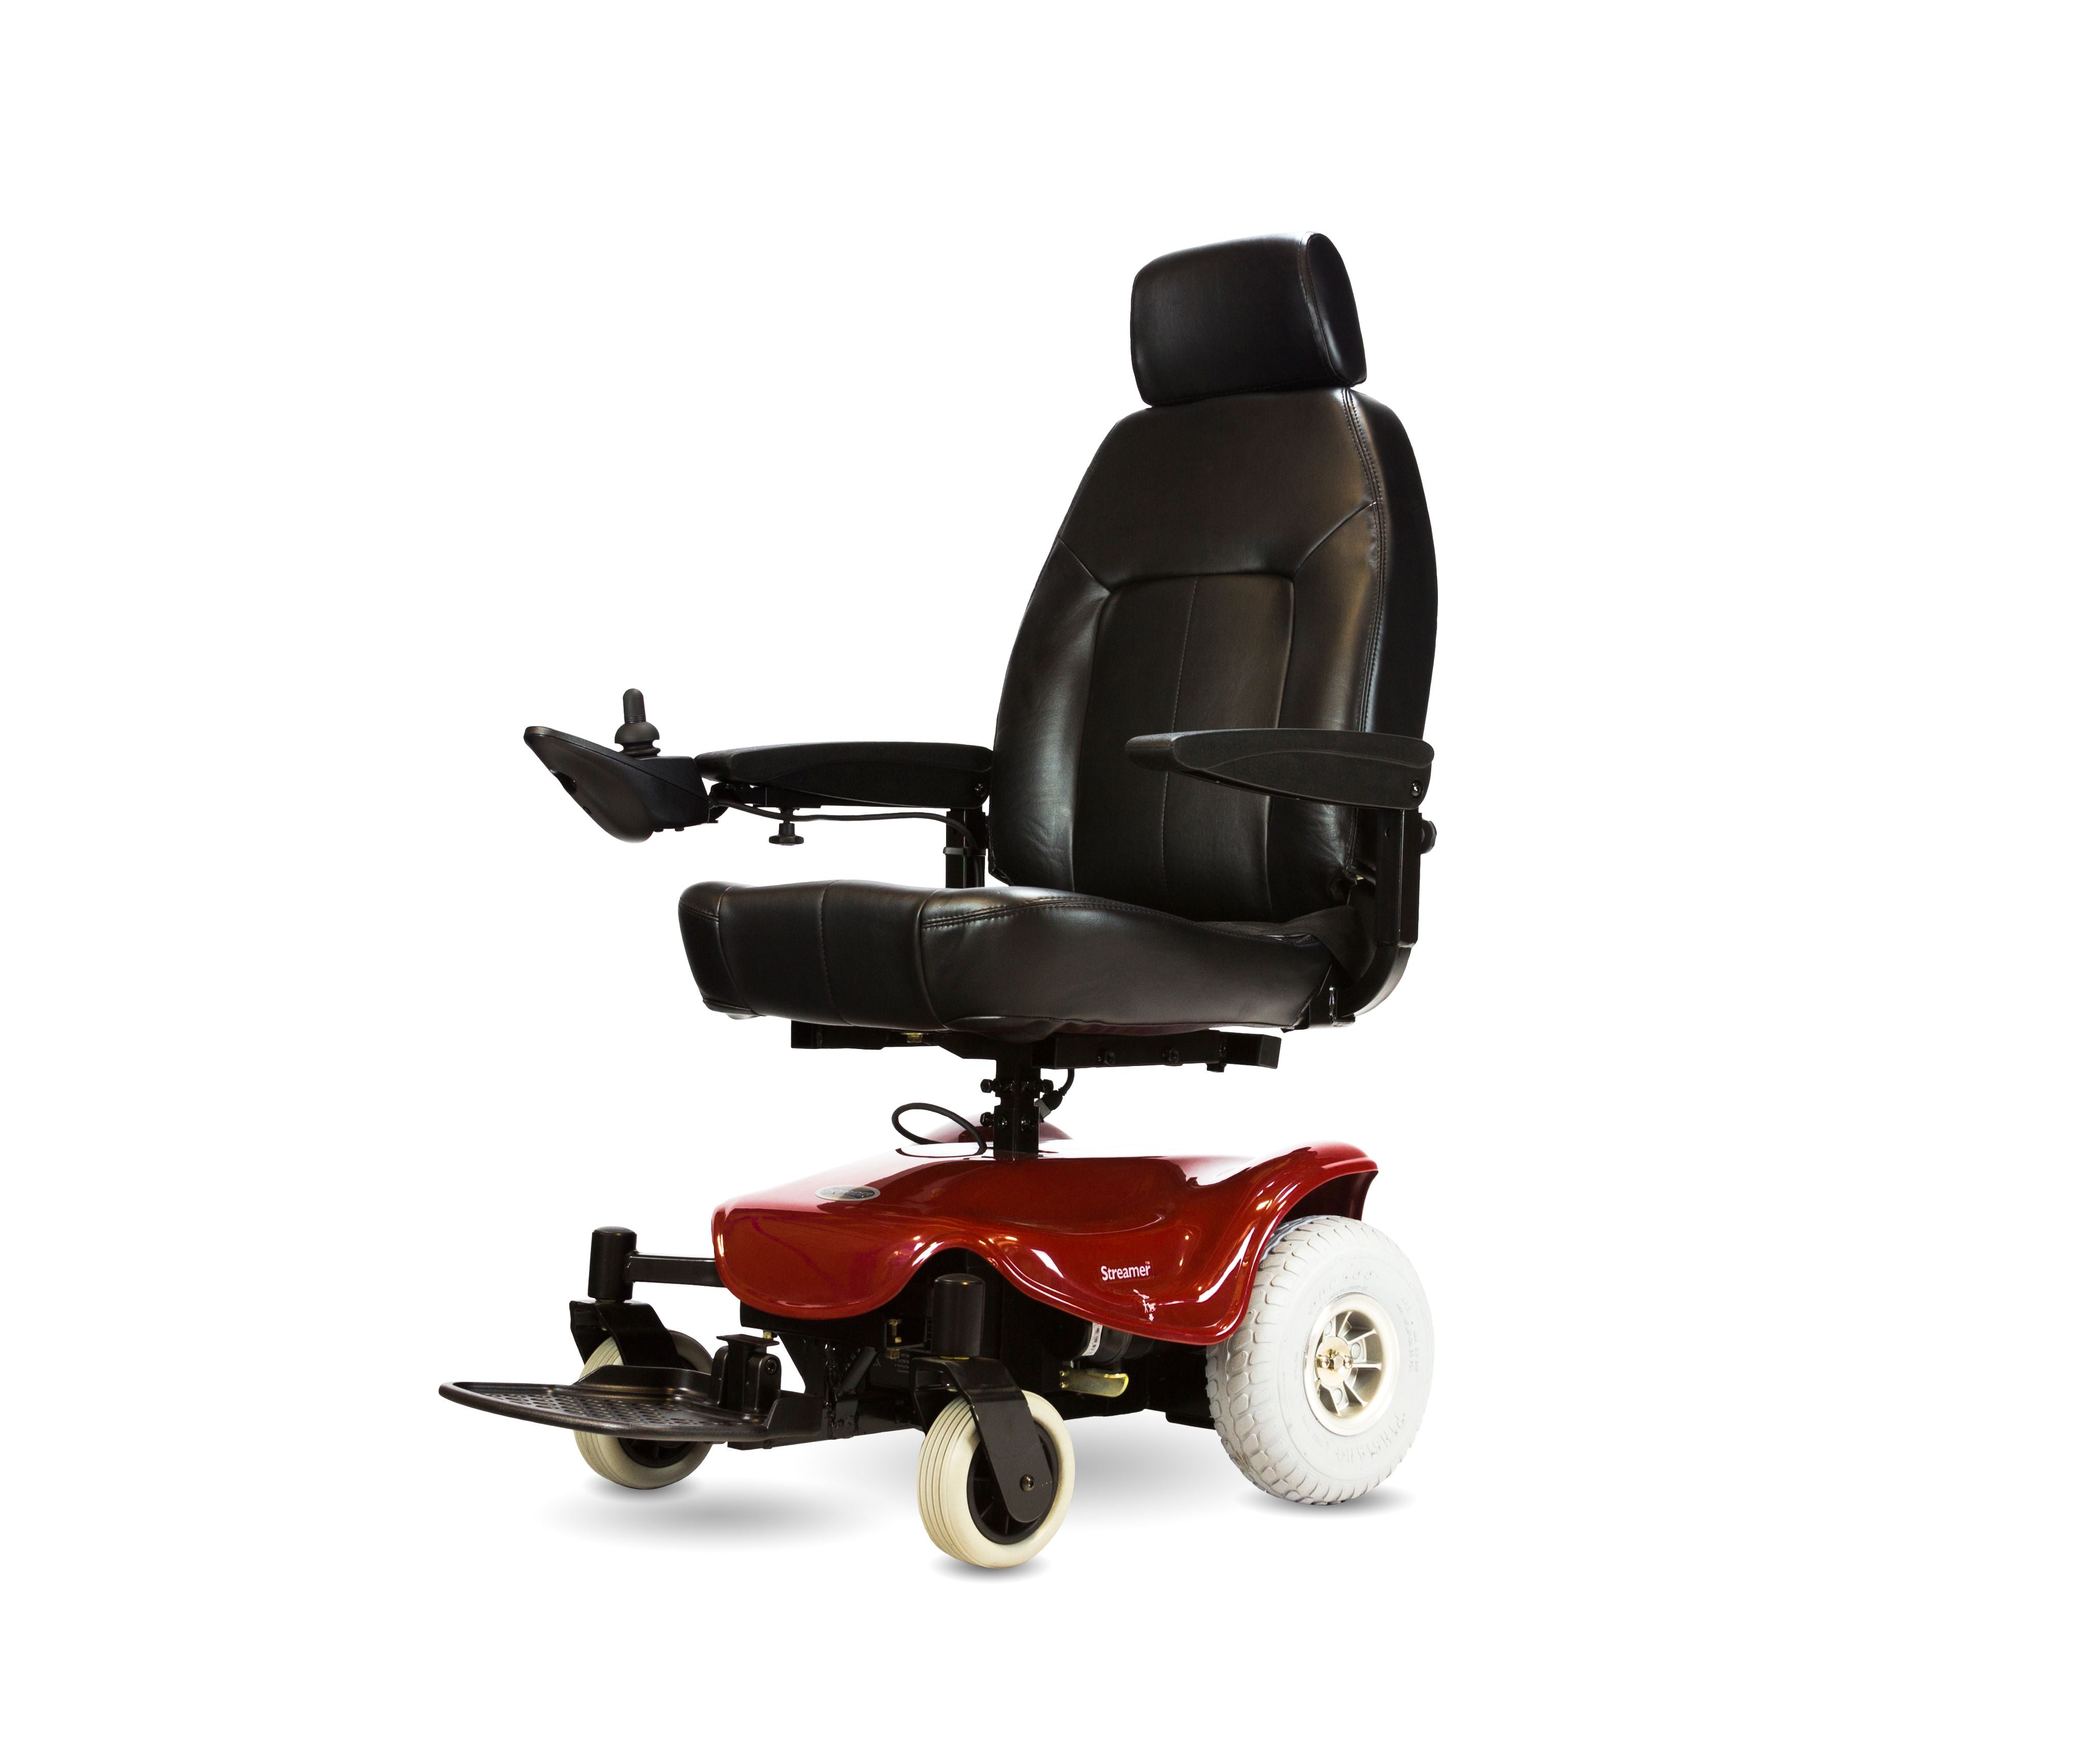 Shoprider Streamer Sport Mobility Power Wheelchair